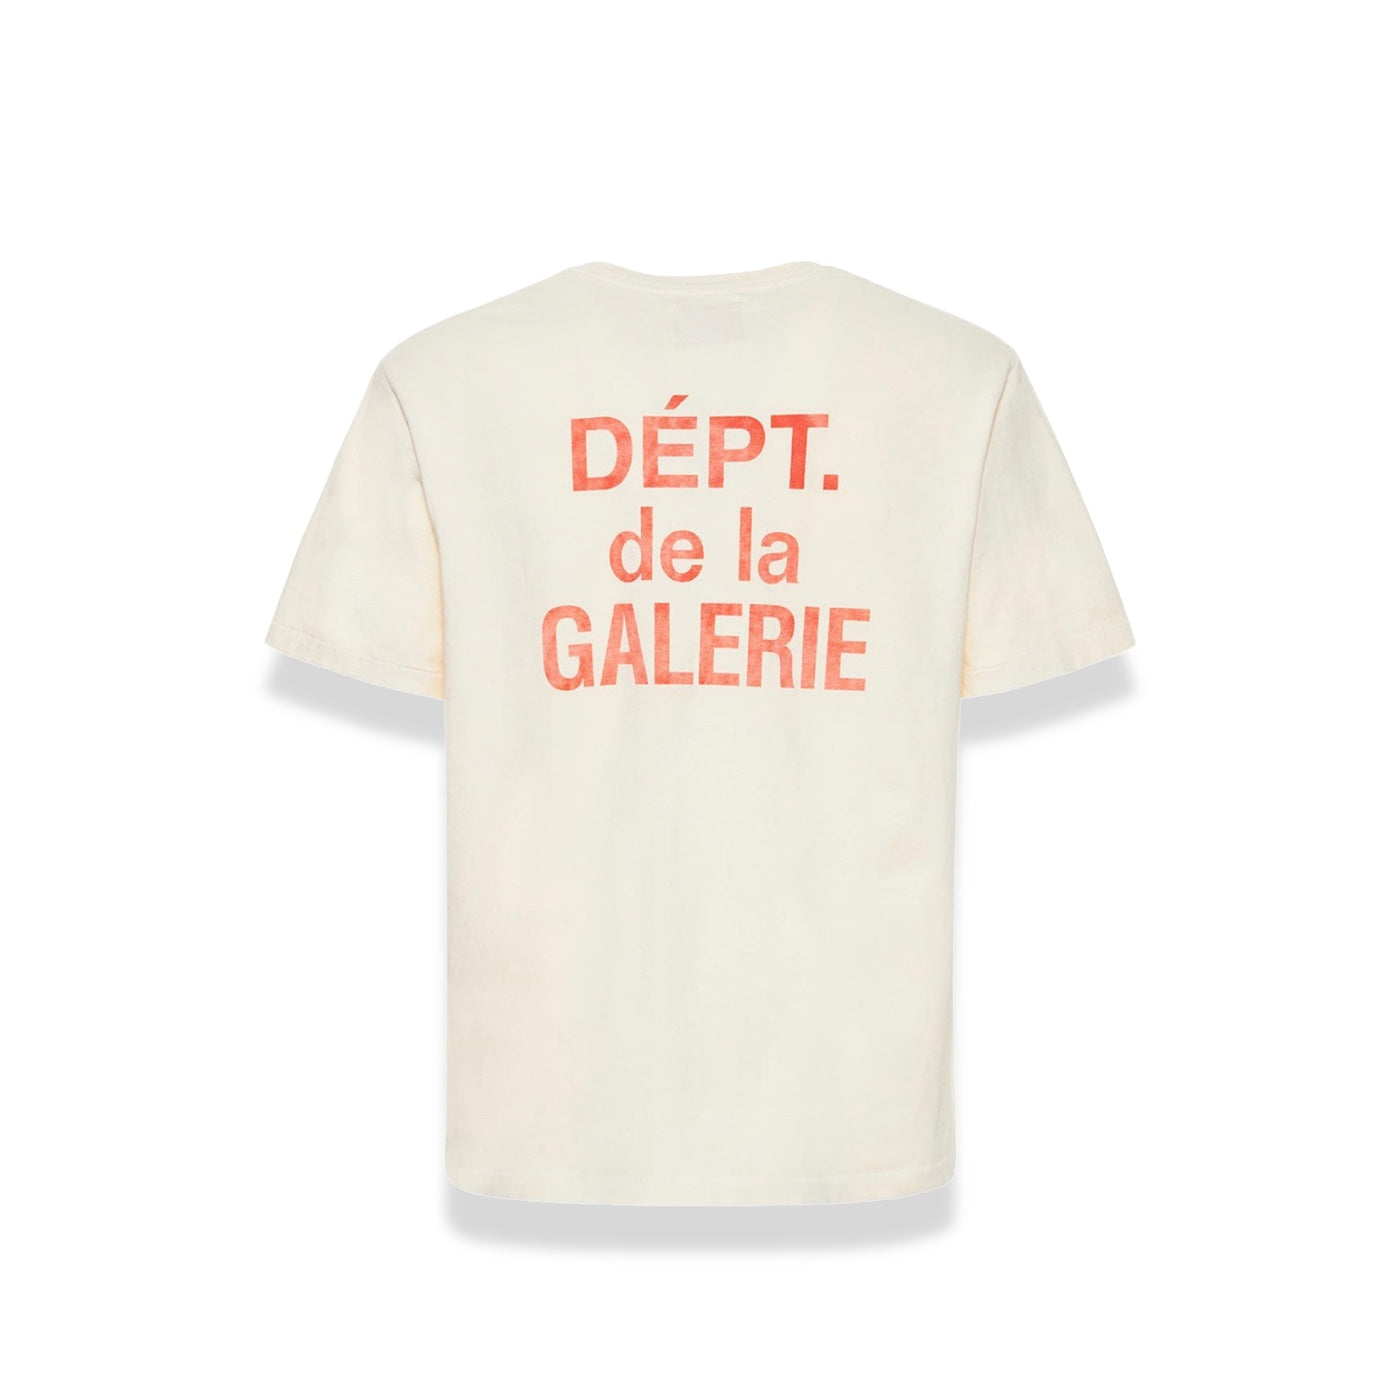 Gallery Dept. - French logo tee Beige